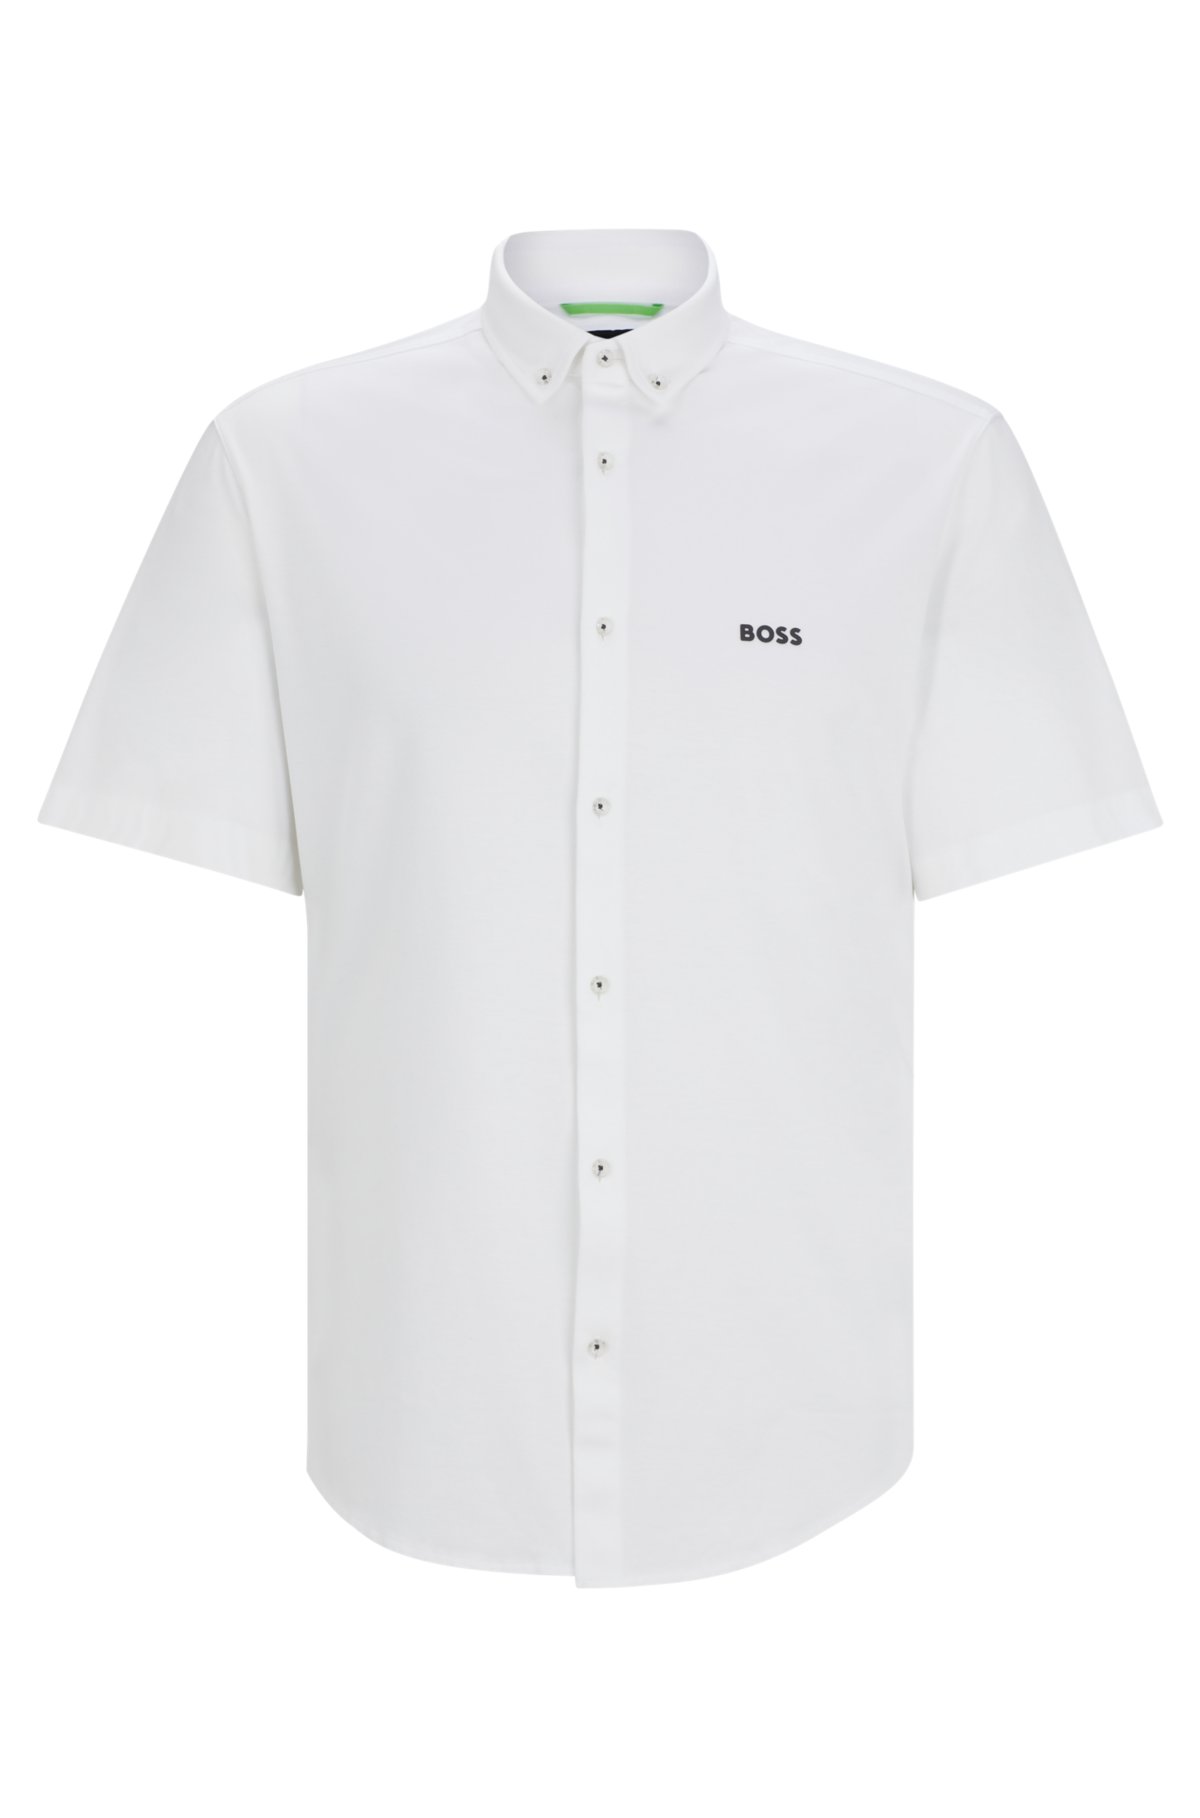 Regular-fit shirt in cotton piqué jersey, White